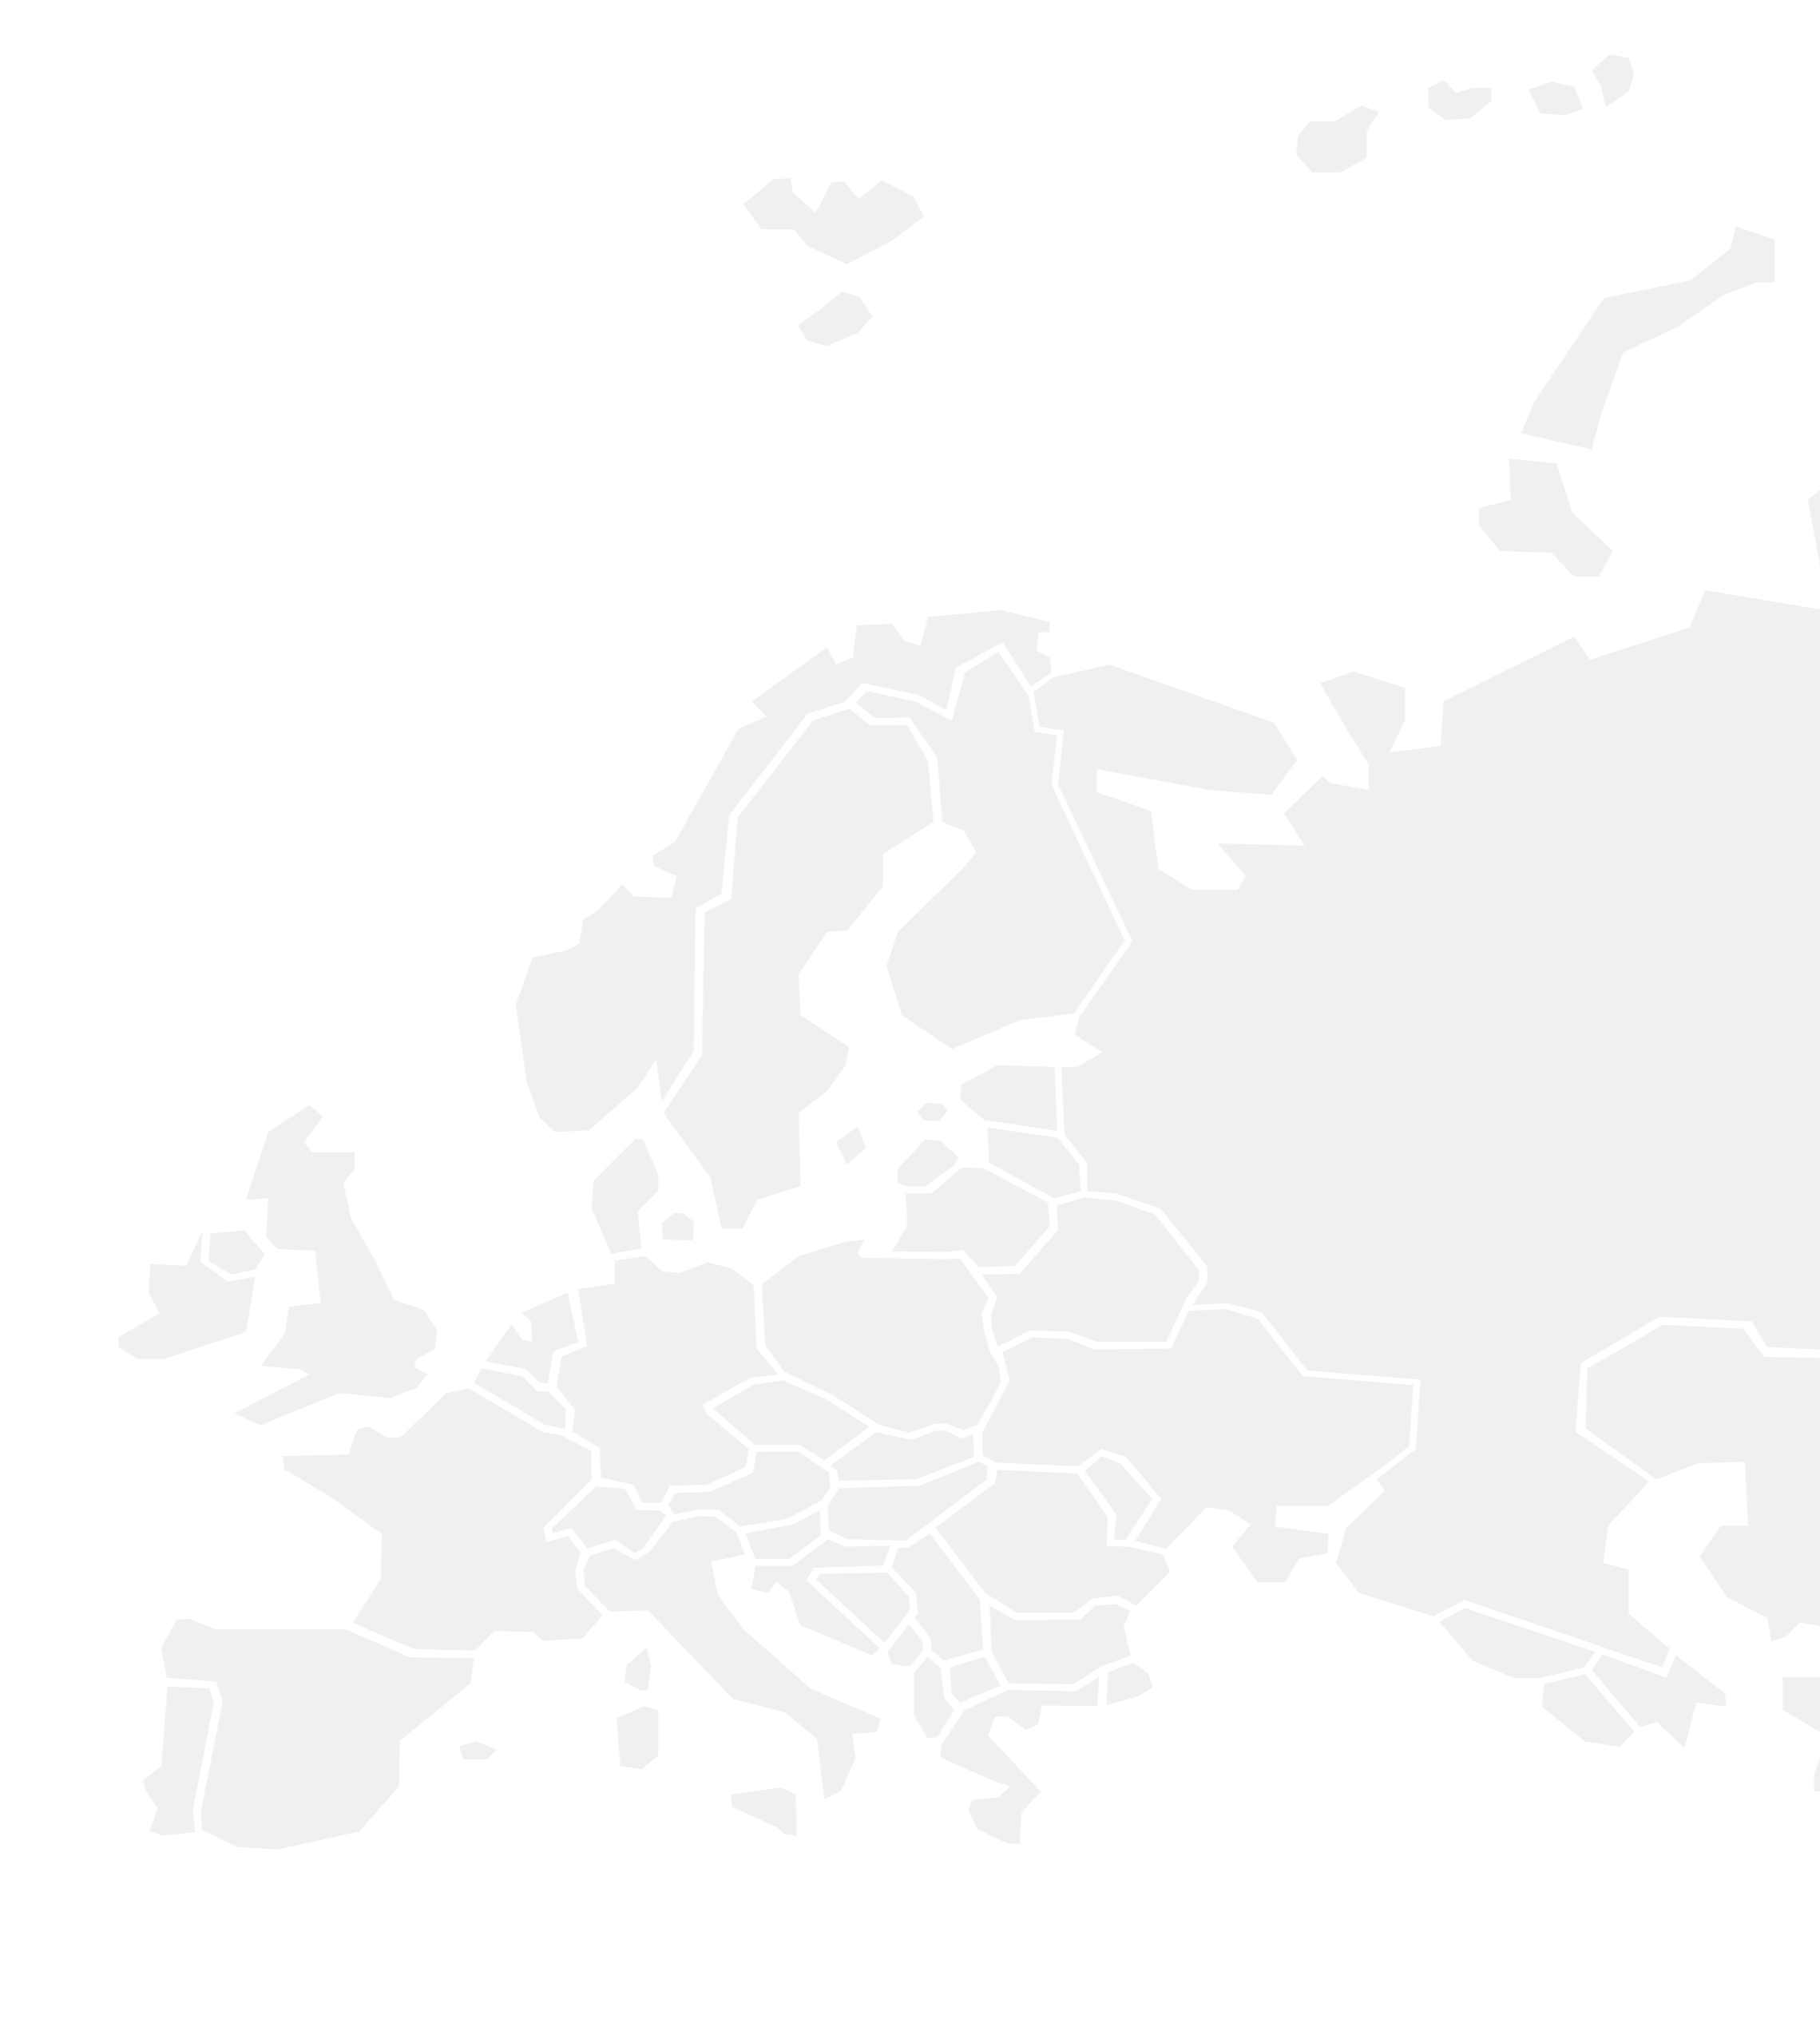 Europe-1